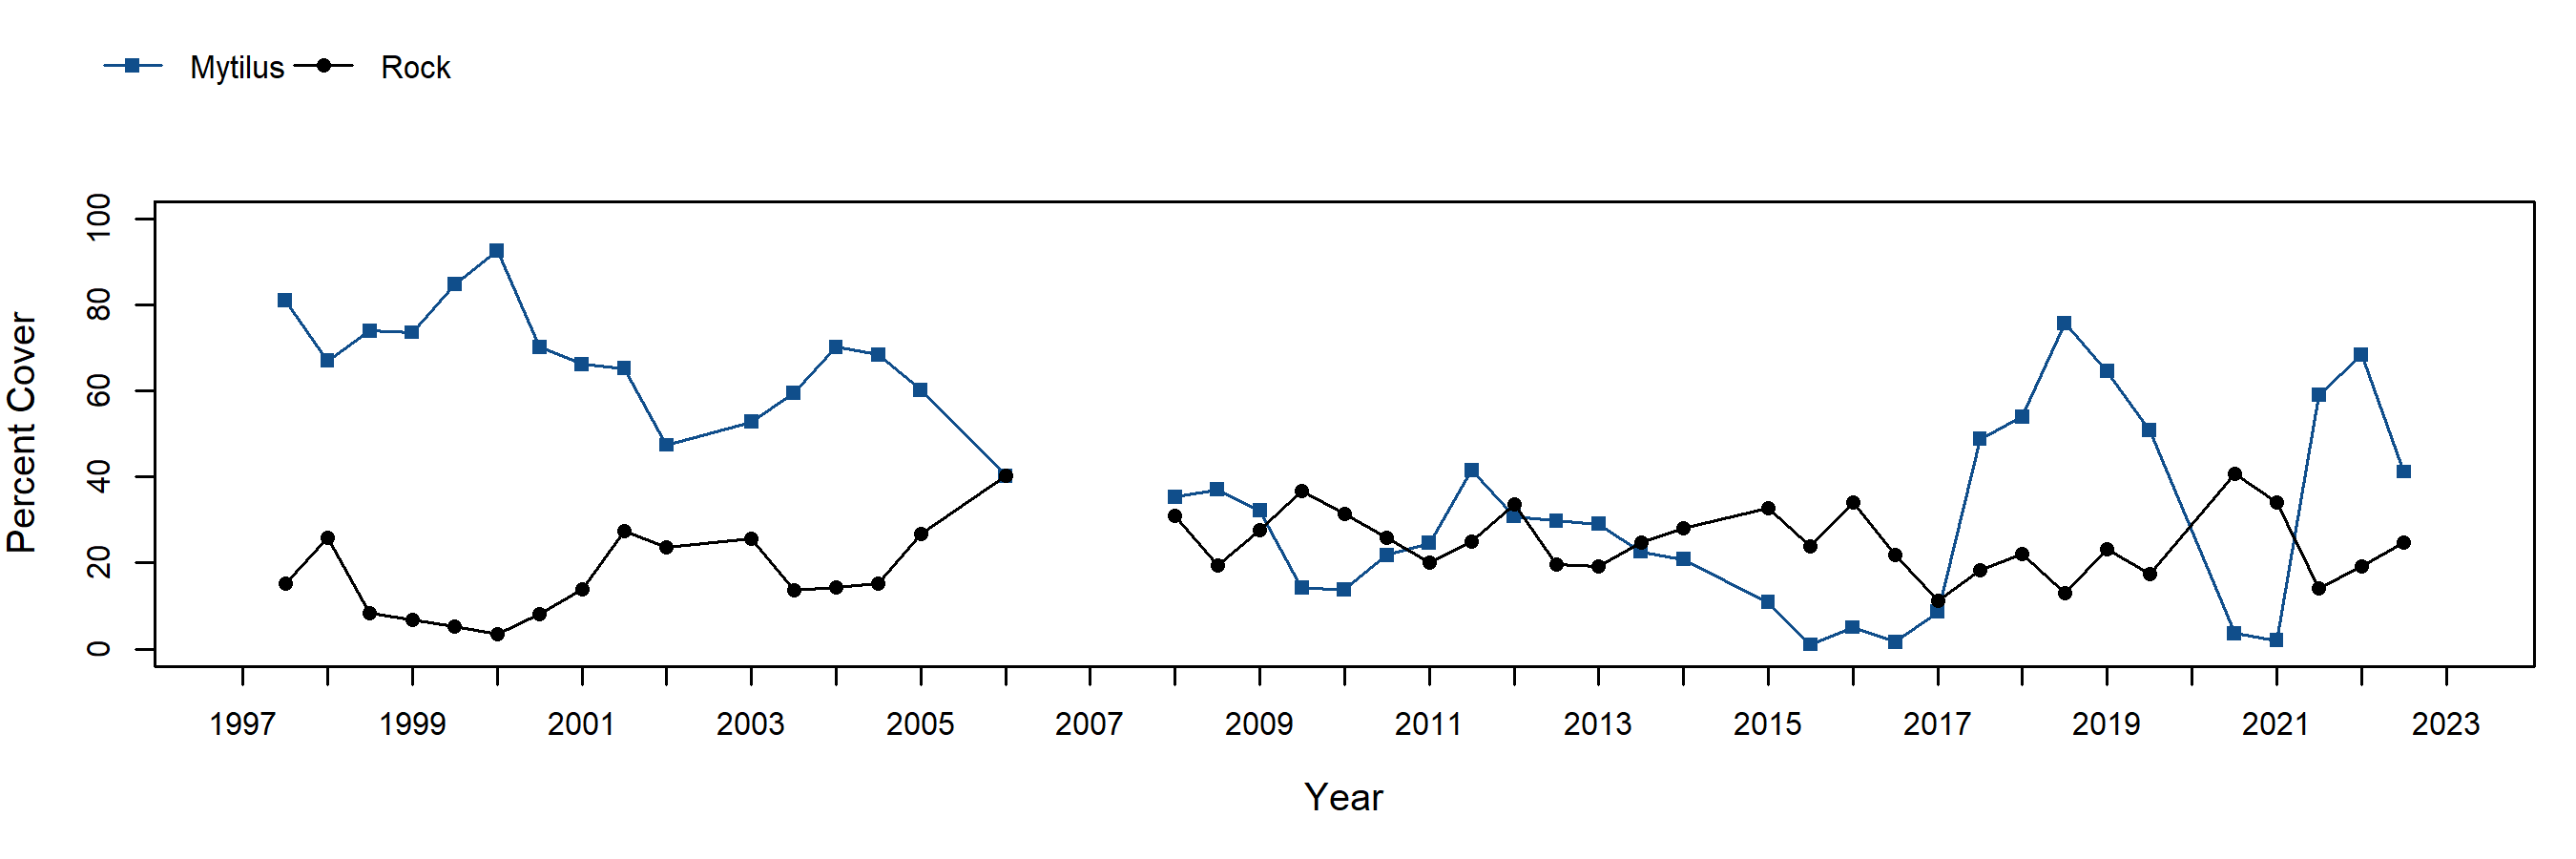 Scripps Reef Mytilus trend plot